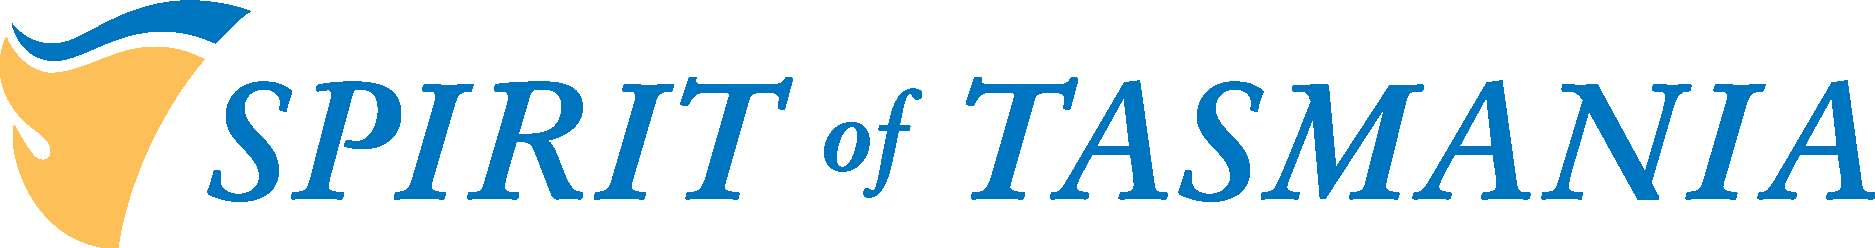 Spirit of Tasmania Logo Vector